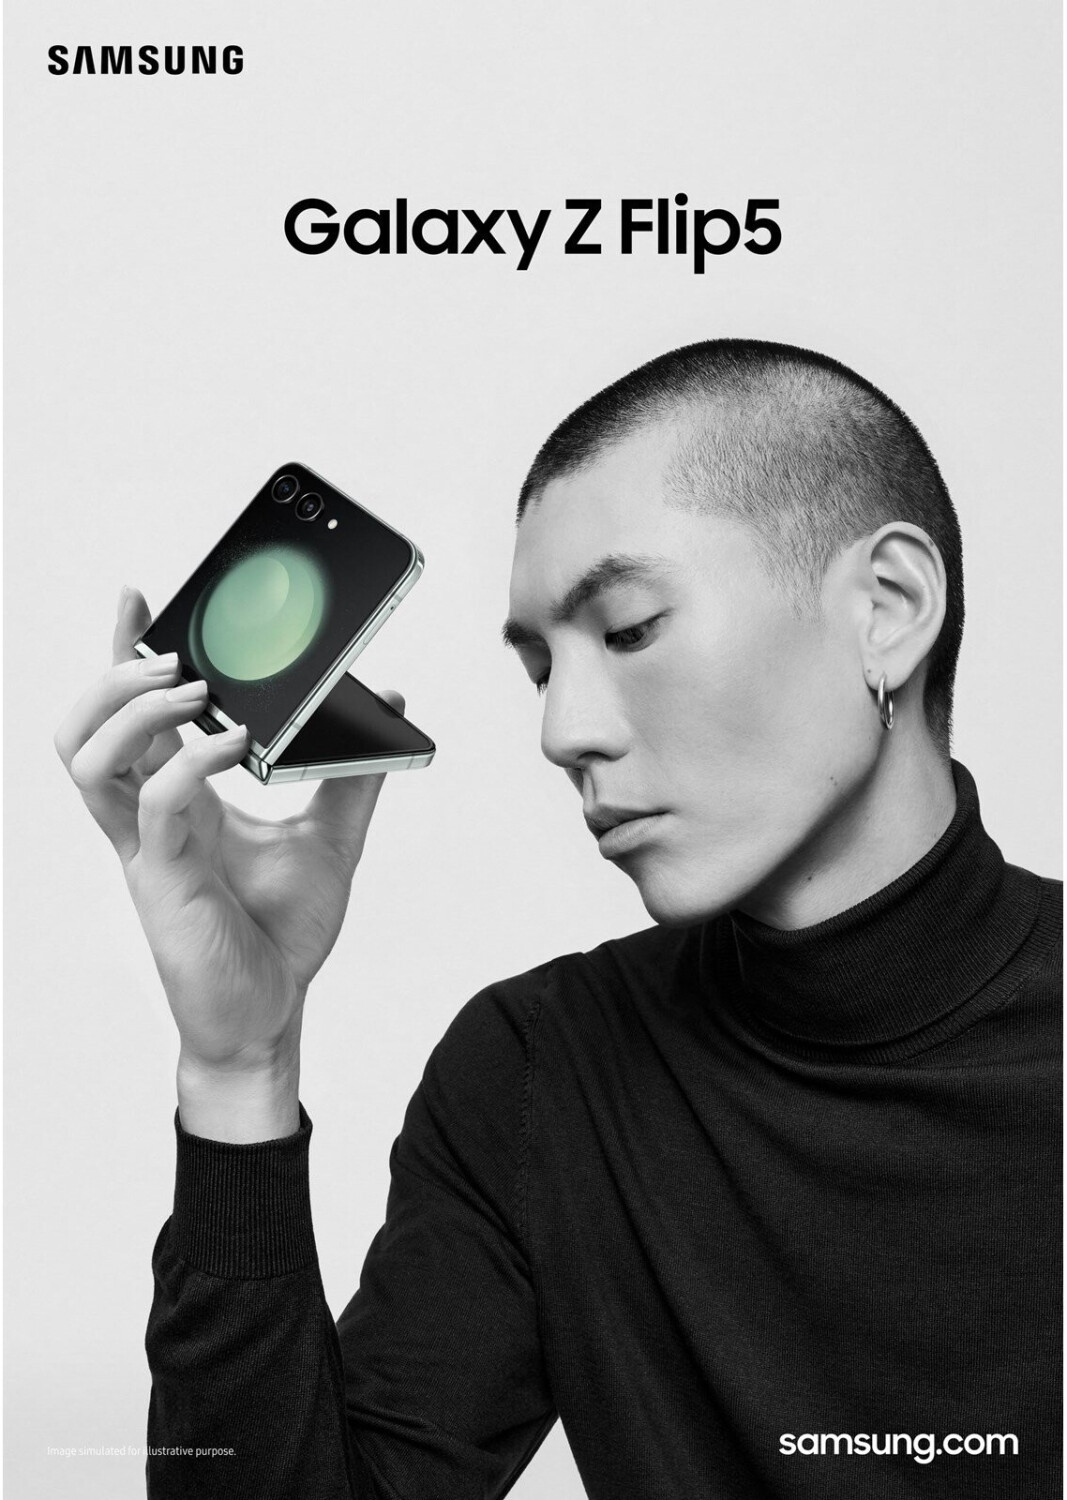 | € Samsung Z 819,00 Preisvergleich bei Flip5 256GB Galaxy ab Lavender